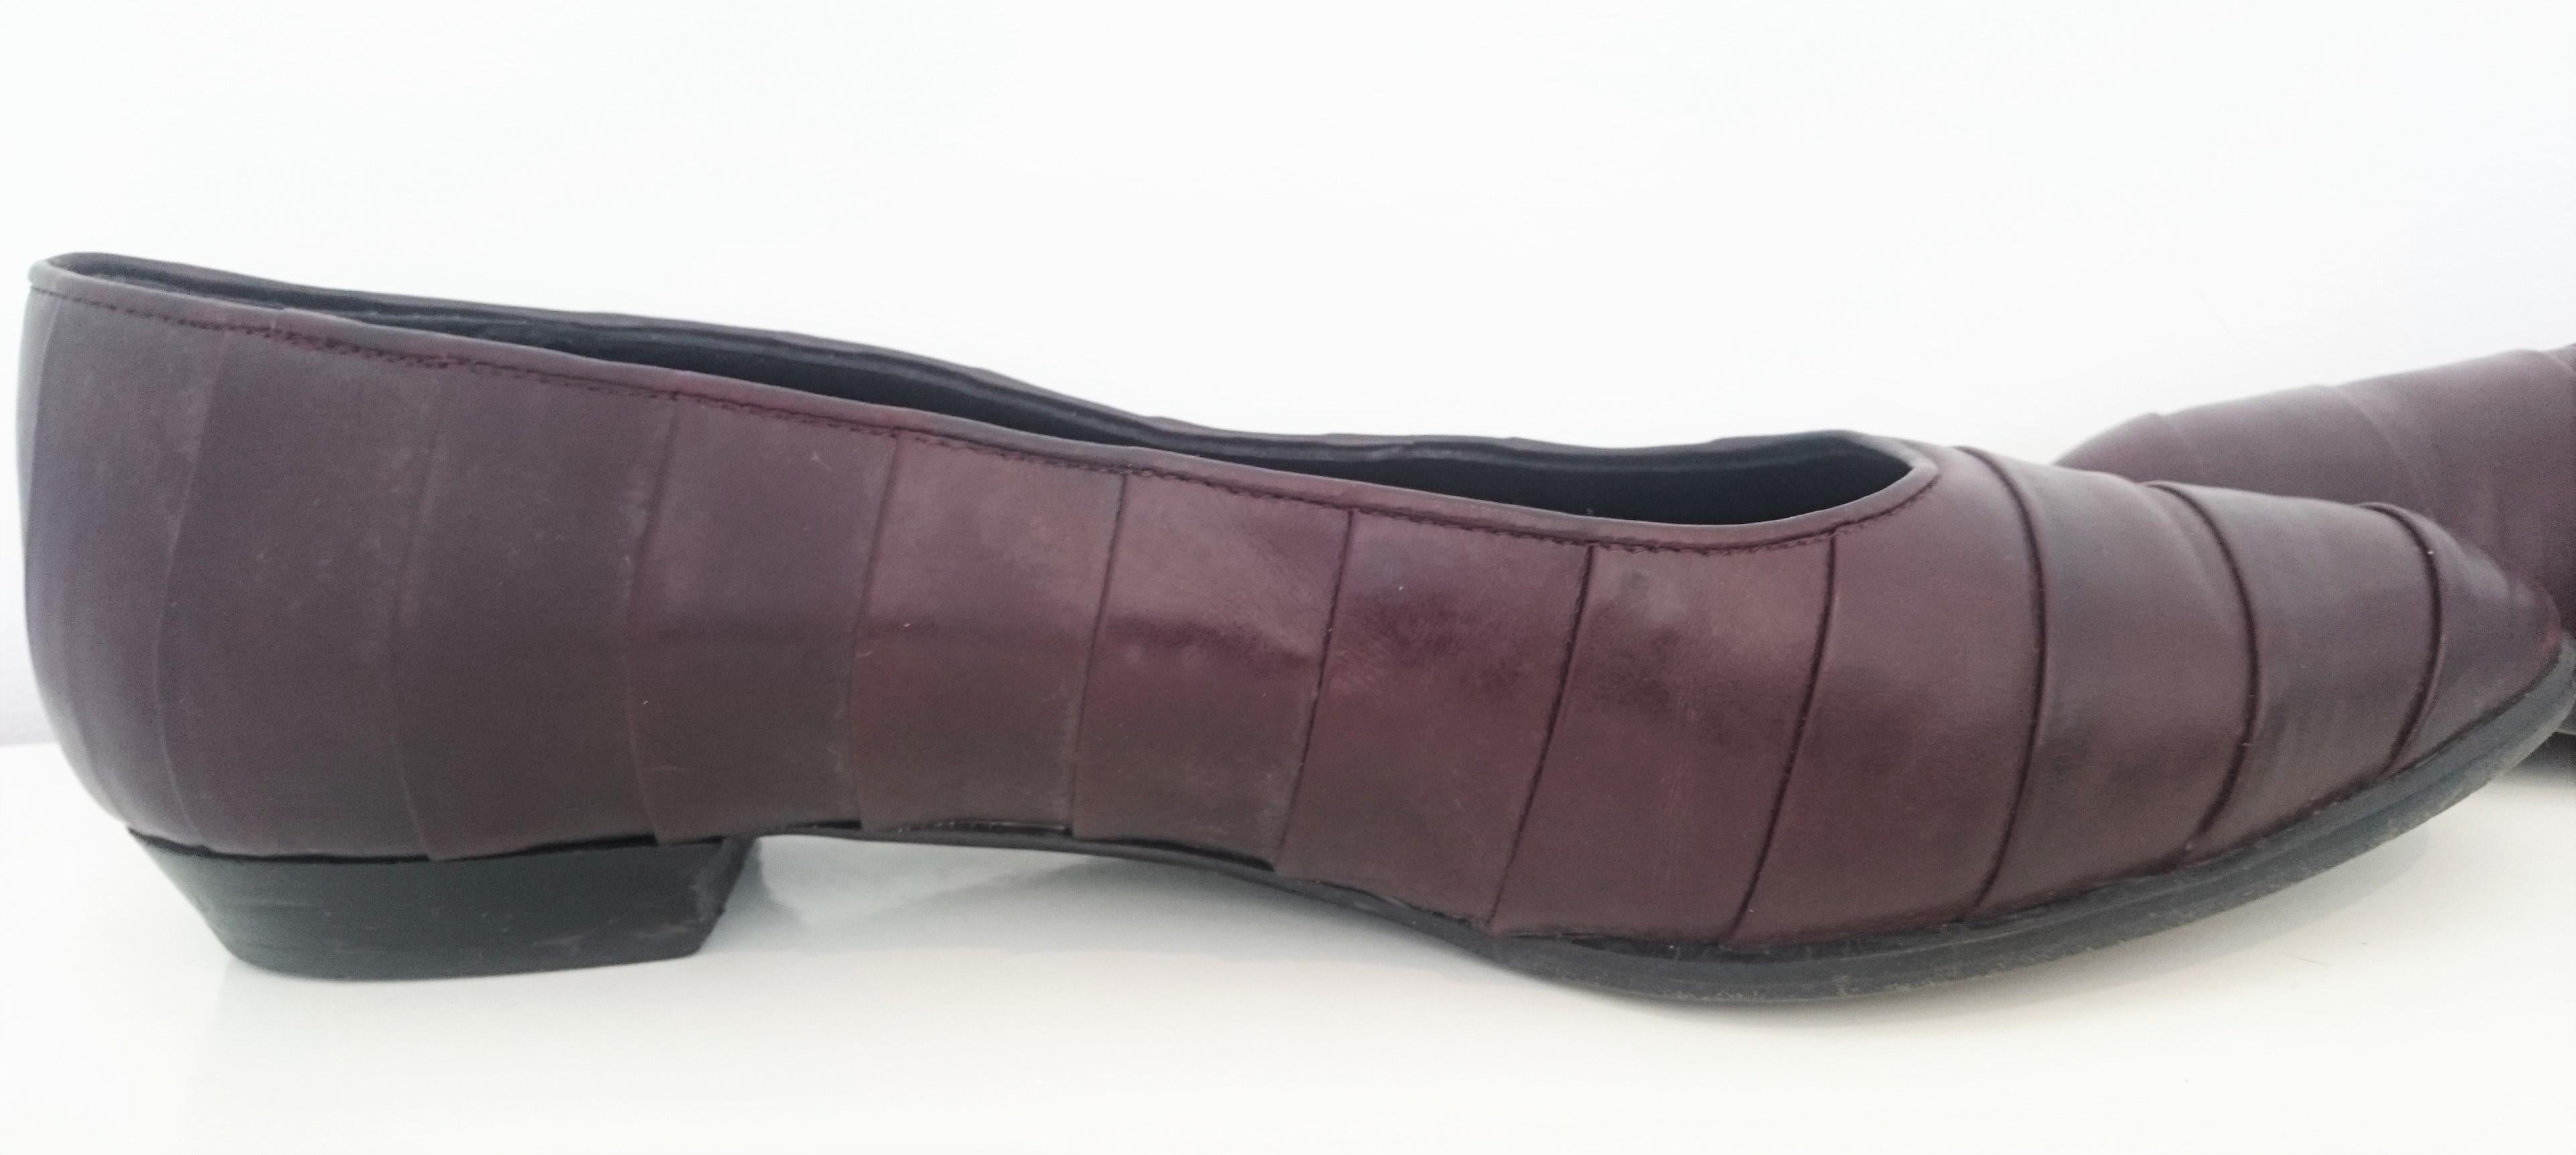 Gianfranco Ferré Dark Brown Leather Ballet Flats. Size 39.5 For Sale 1